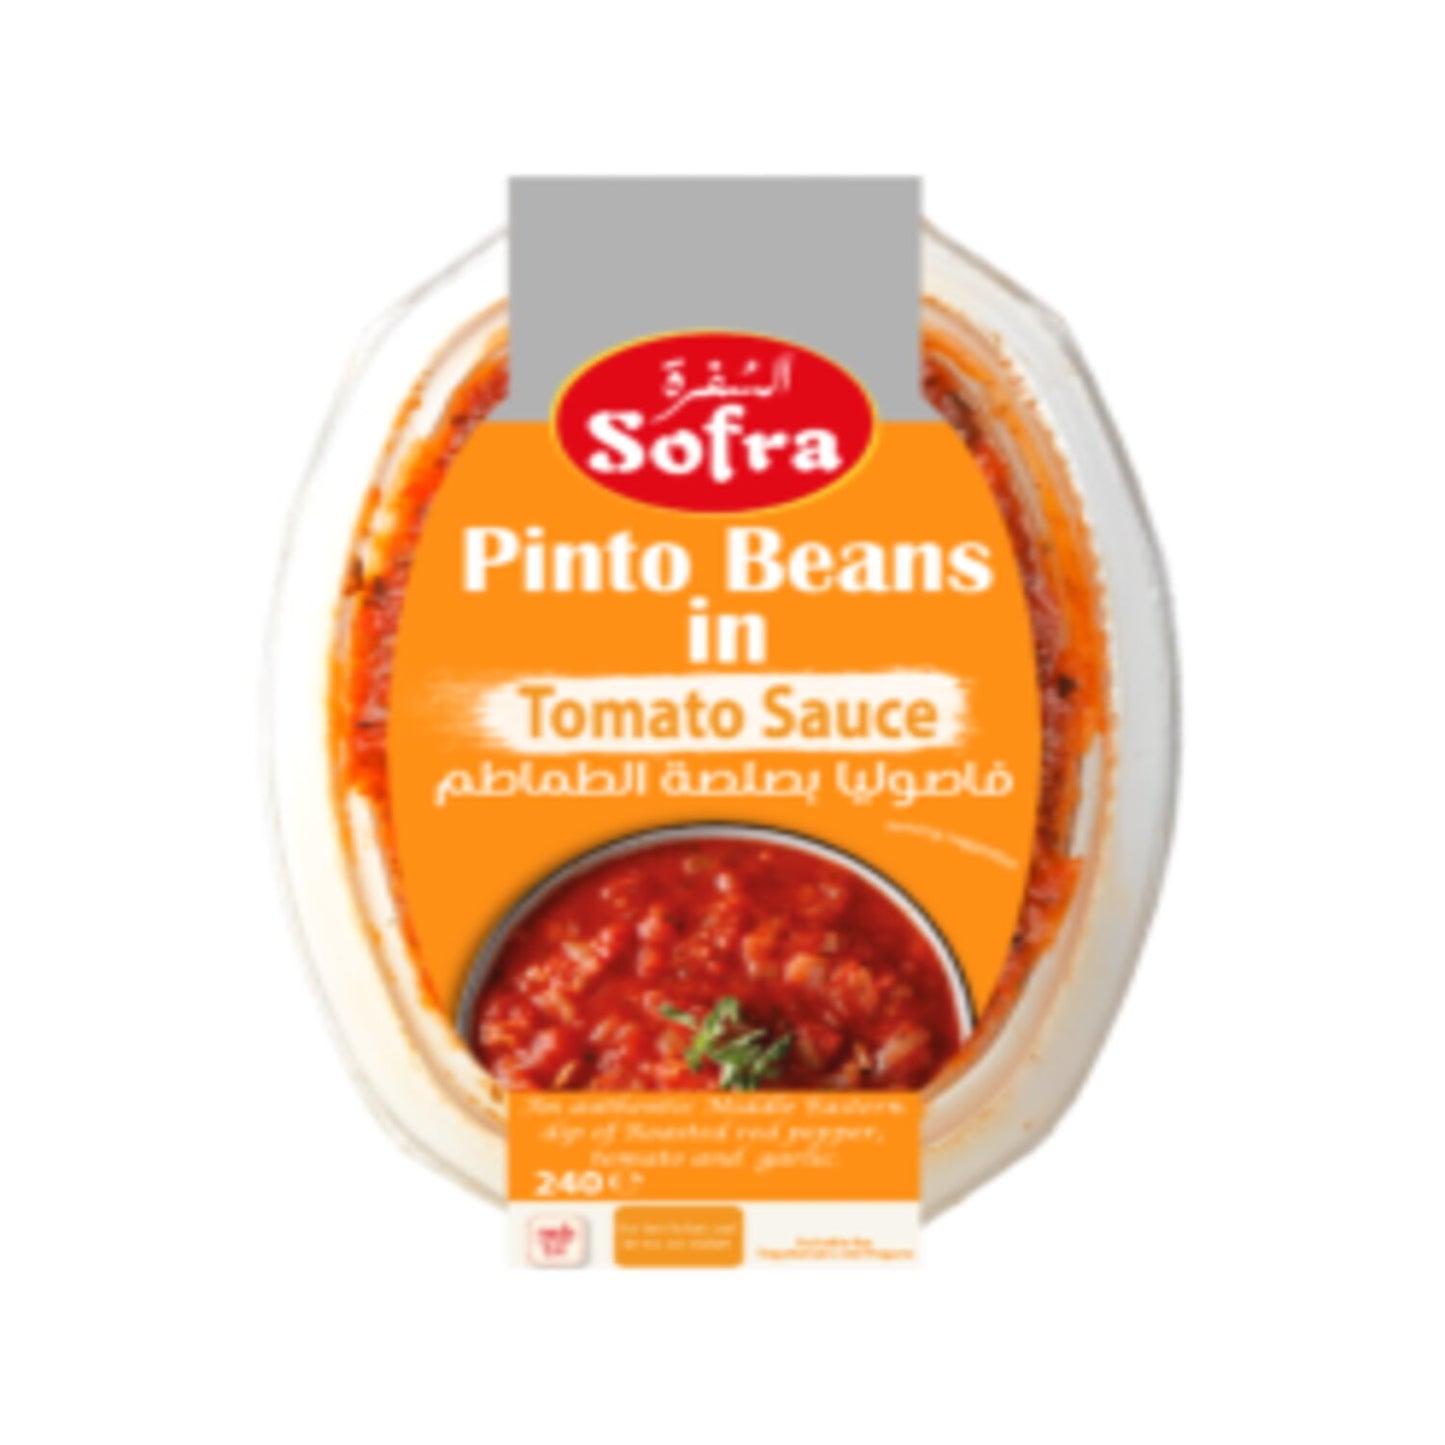 Offer Sofra Pinto Beans in Tomato Sauce 240g X 3pcs